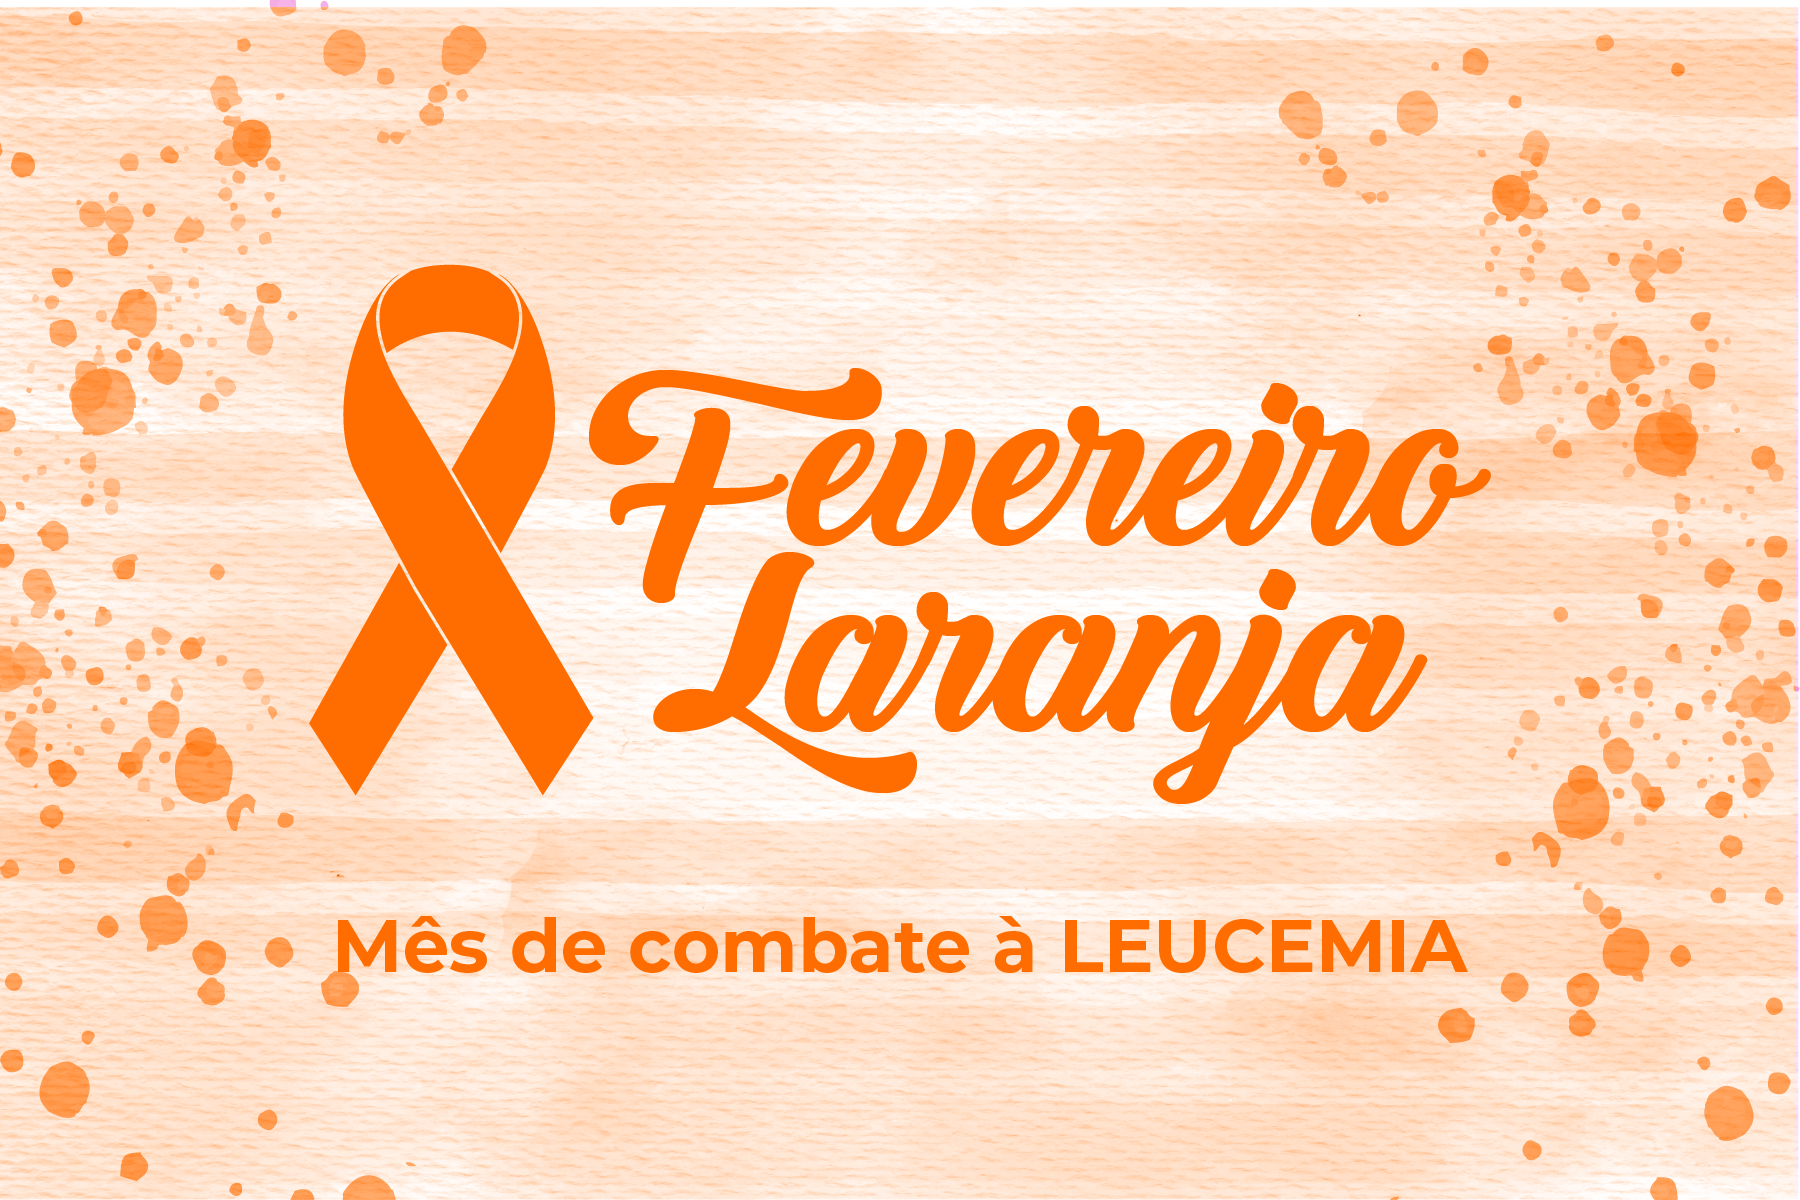 Campanha Fevereiro Laranja alerta sobre sintomas da leucemia Grupo